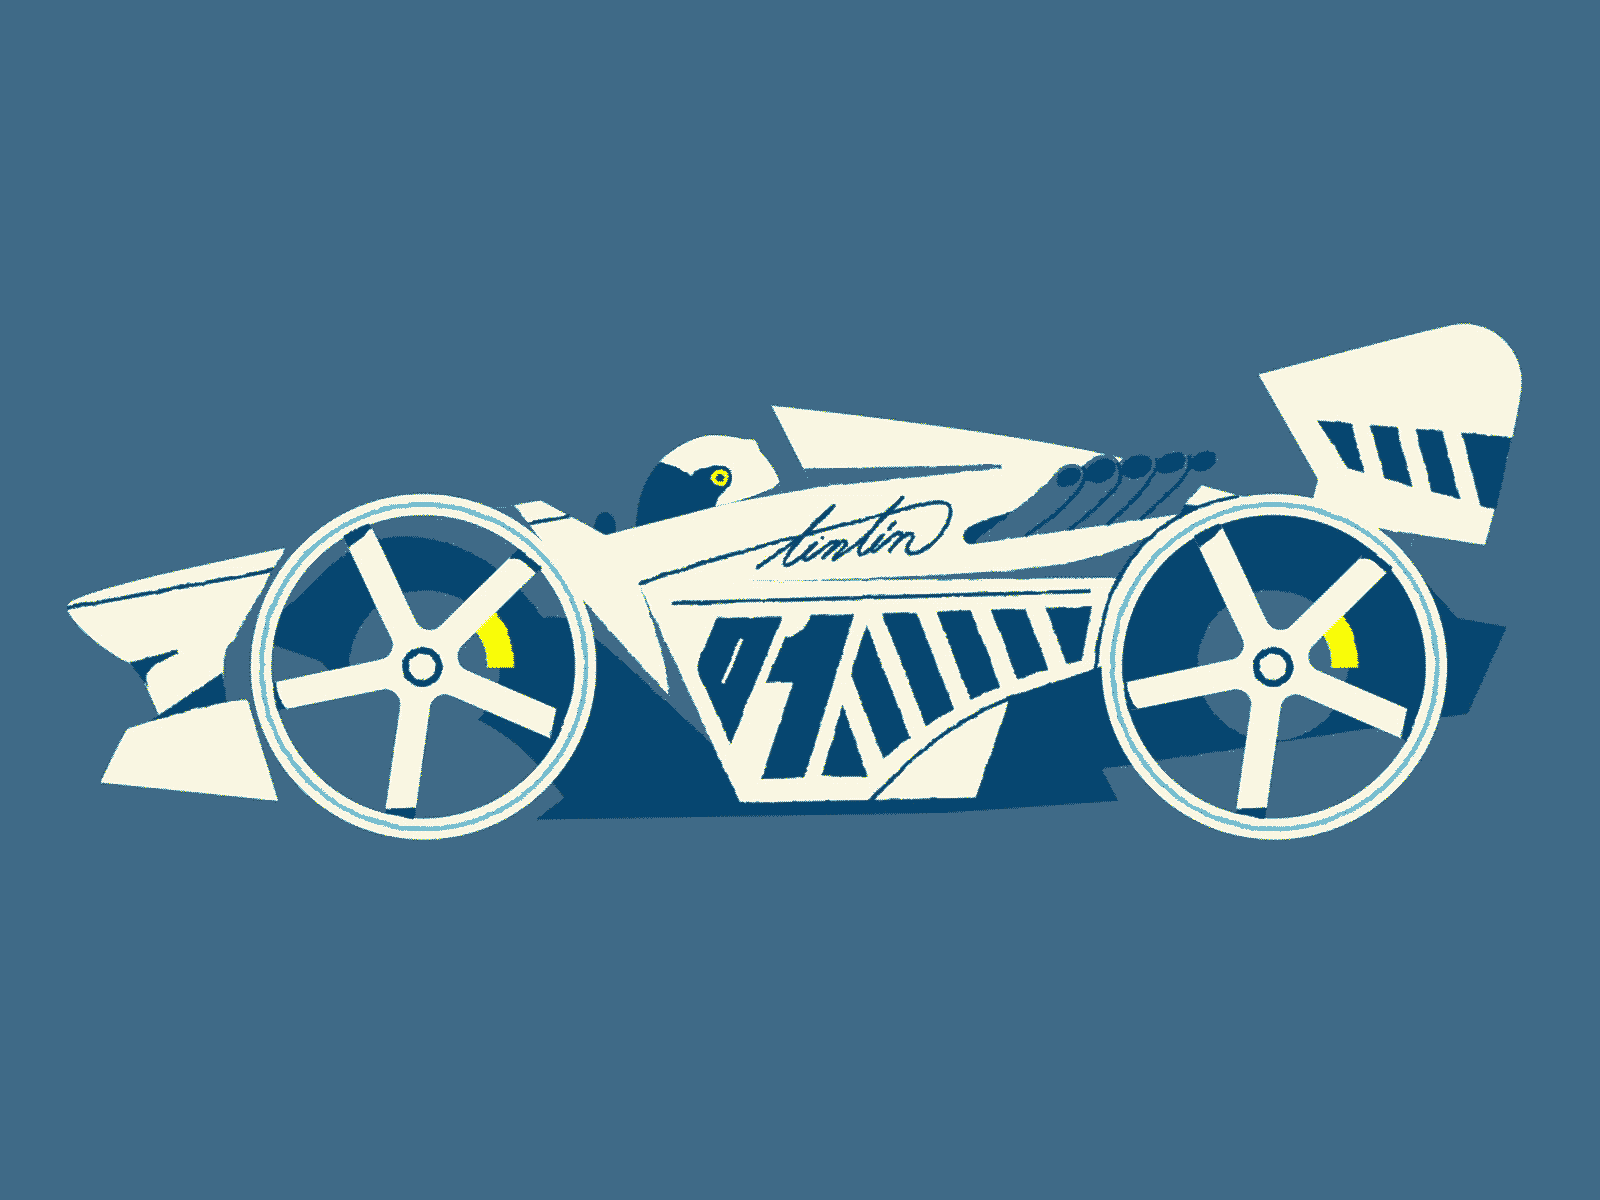 Hot Wheels animation car hotwheels illustraion kids motion toycar vector illustration